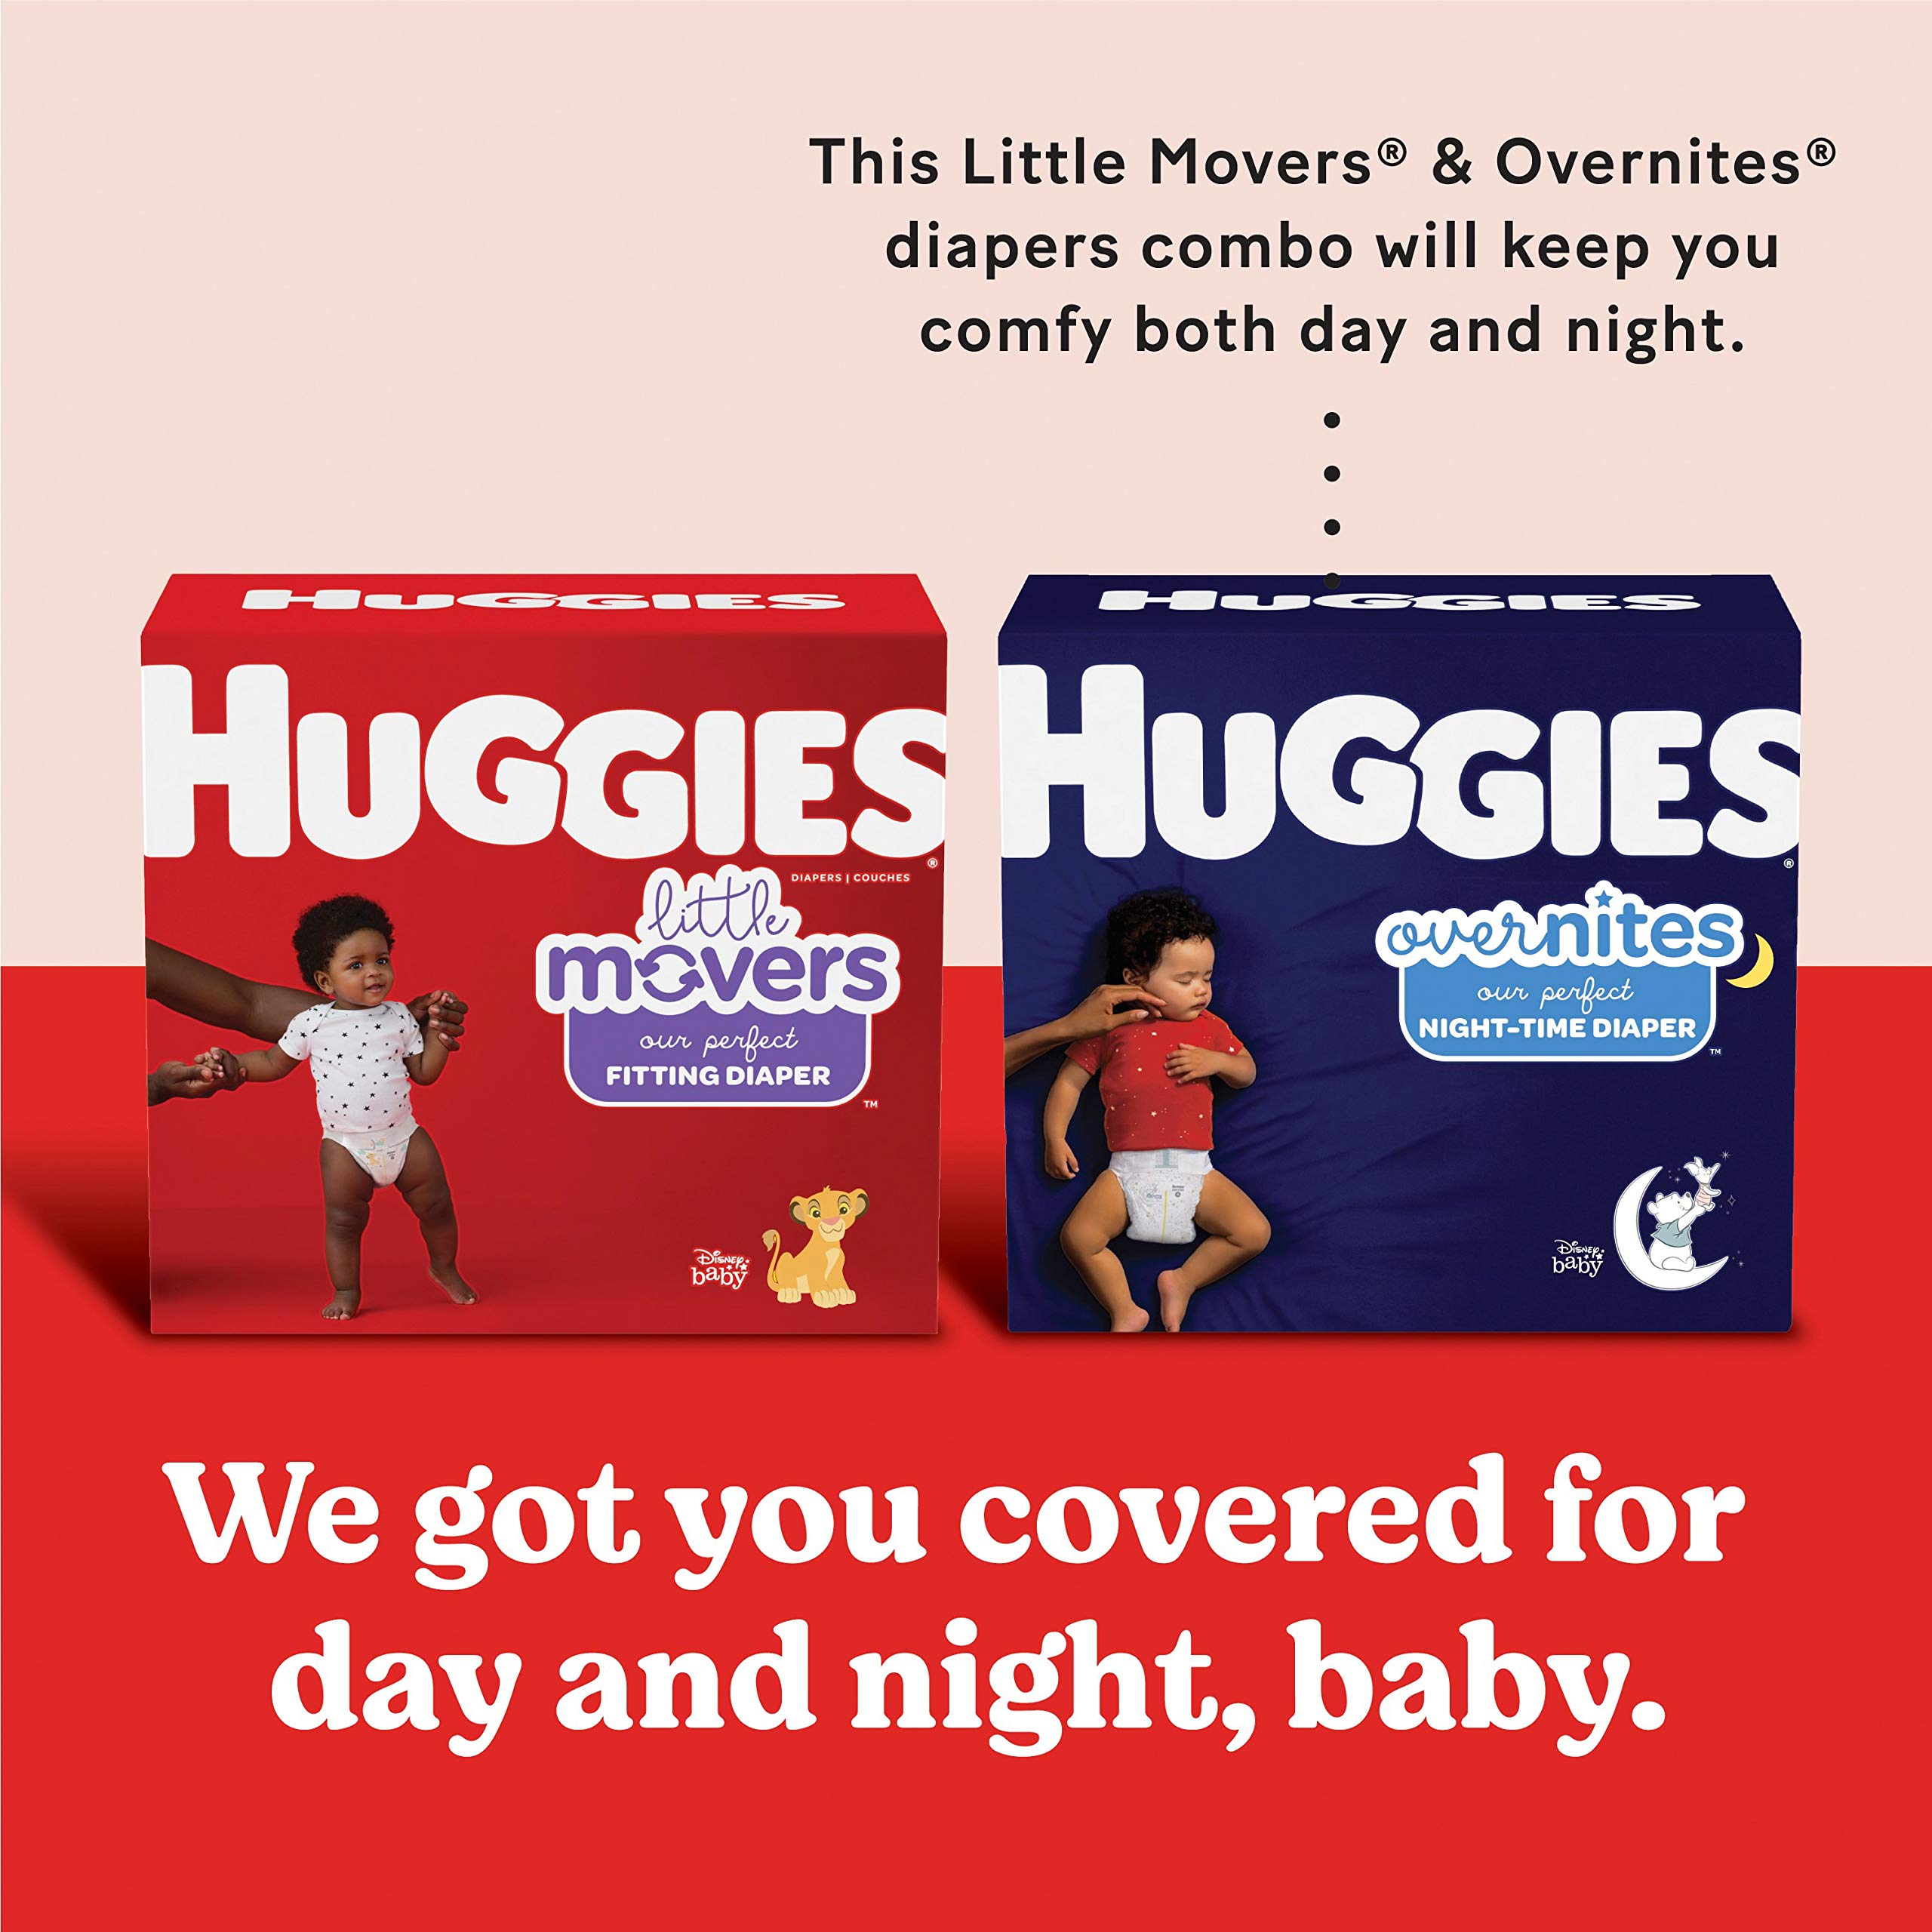 Huggies Overnites Diapers, Size 5